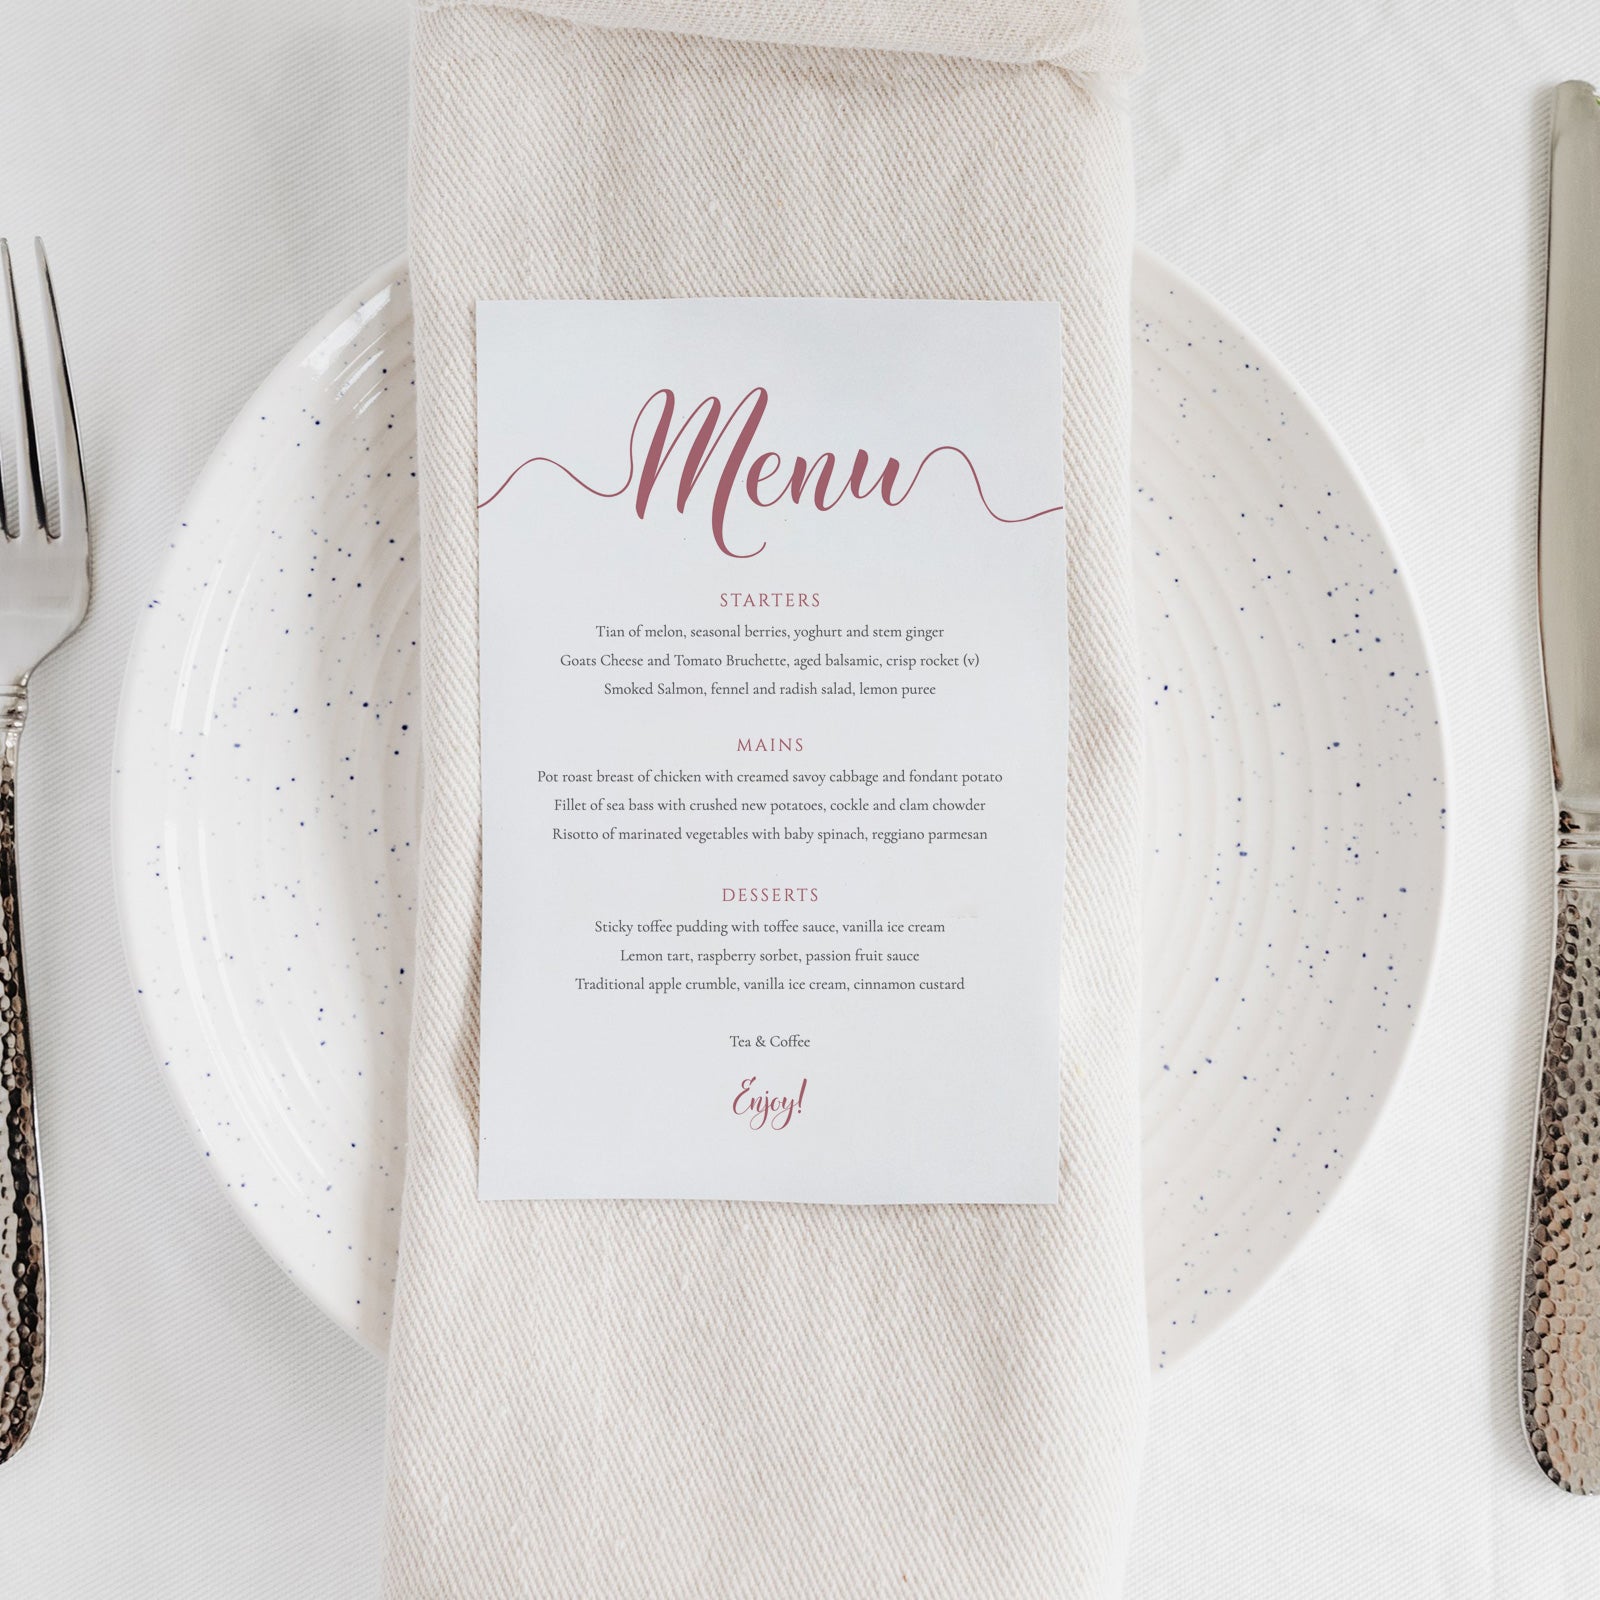 blush pink wedding menu card on a plate